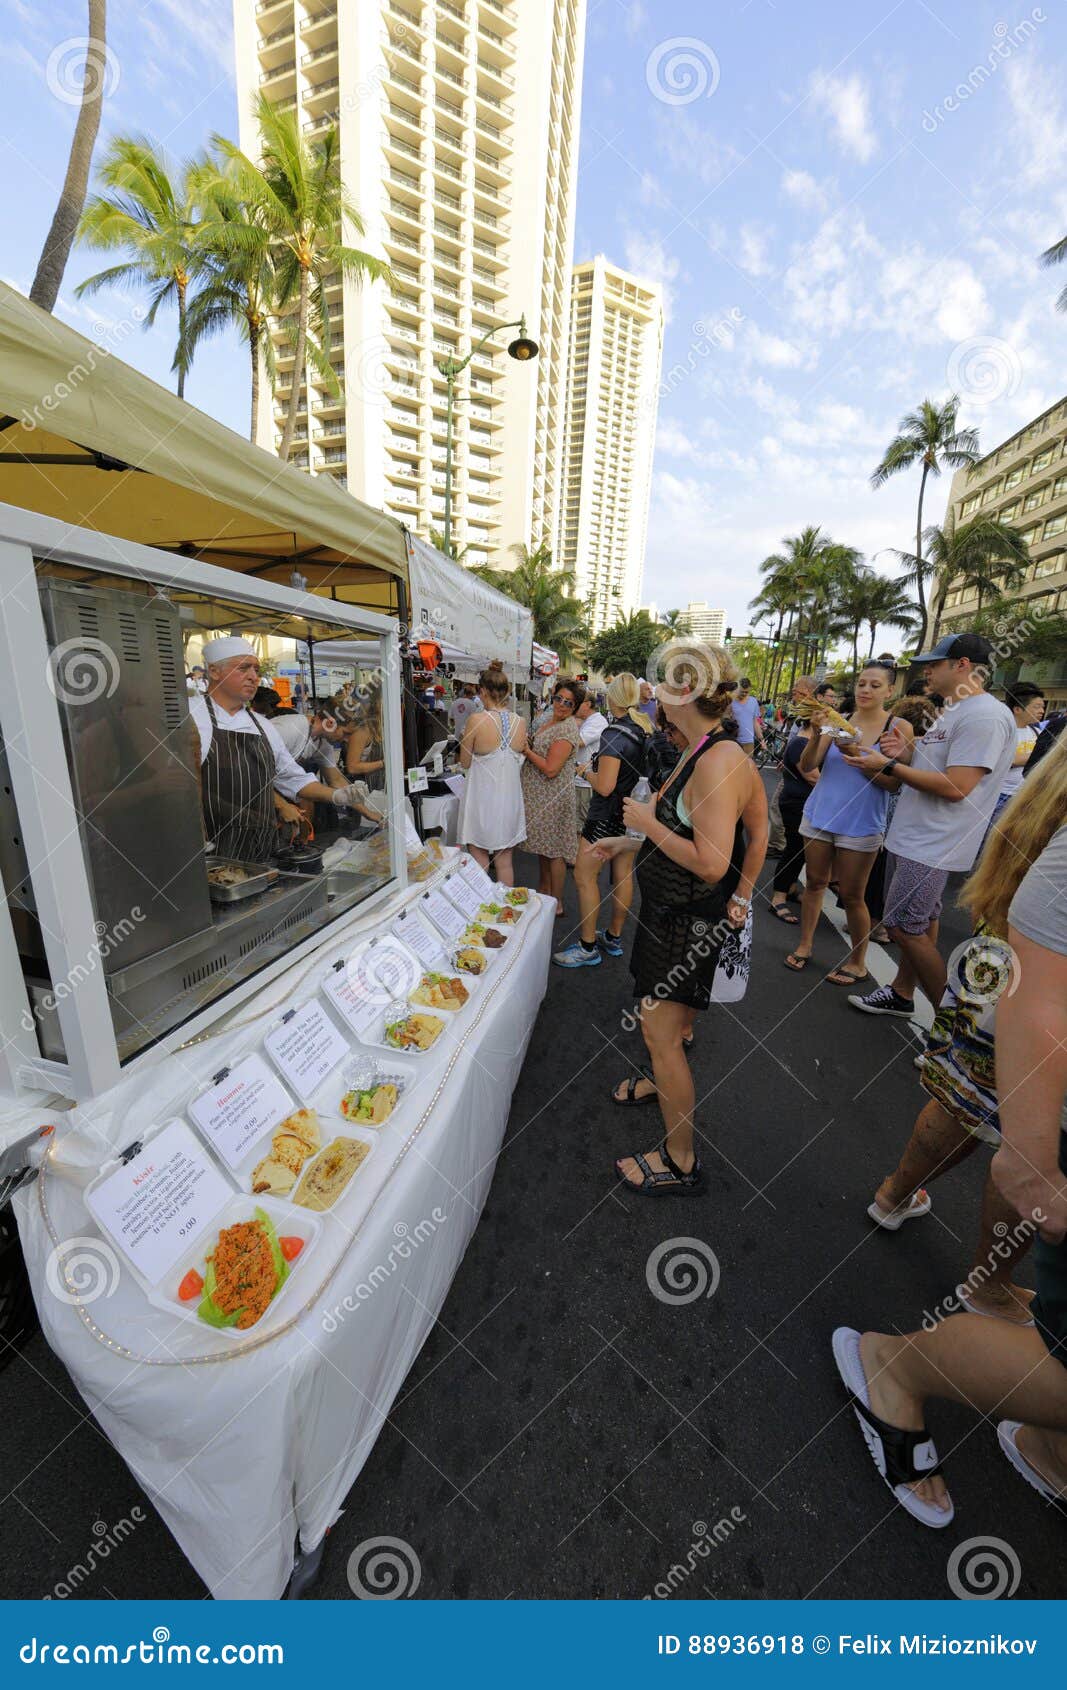 Waikiki street festival editorial stock photo. Image of city 88936918